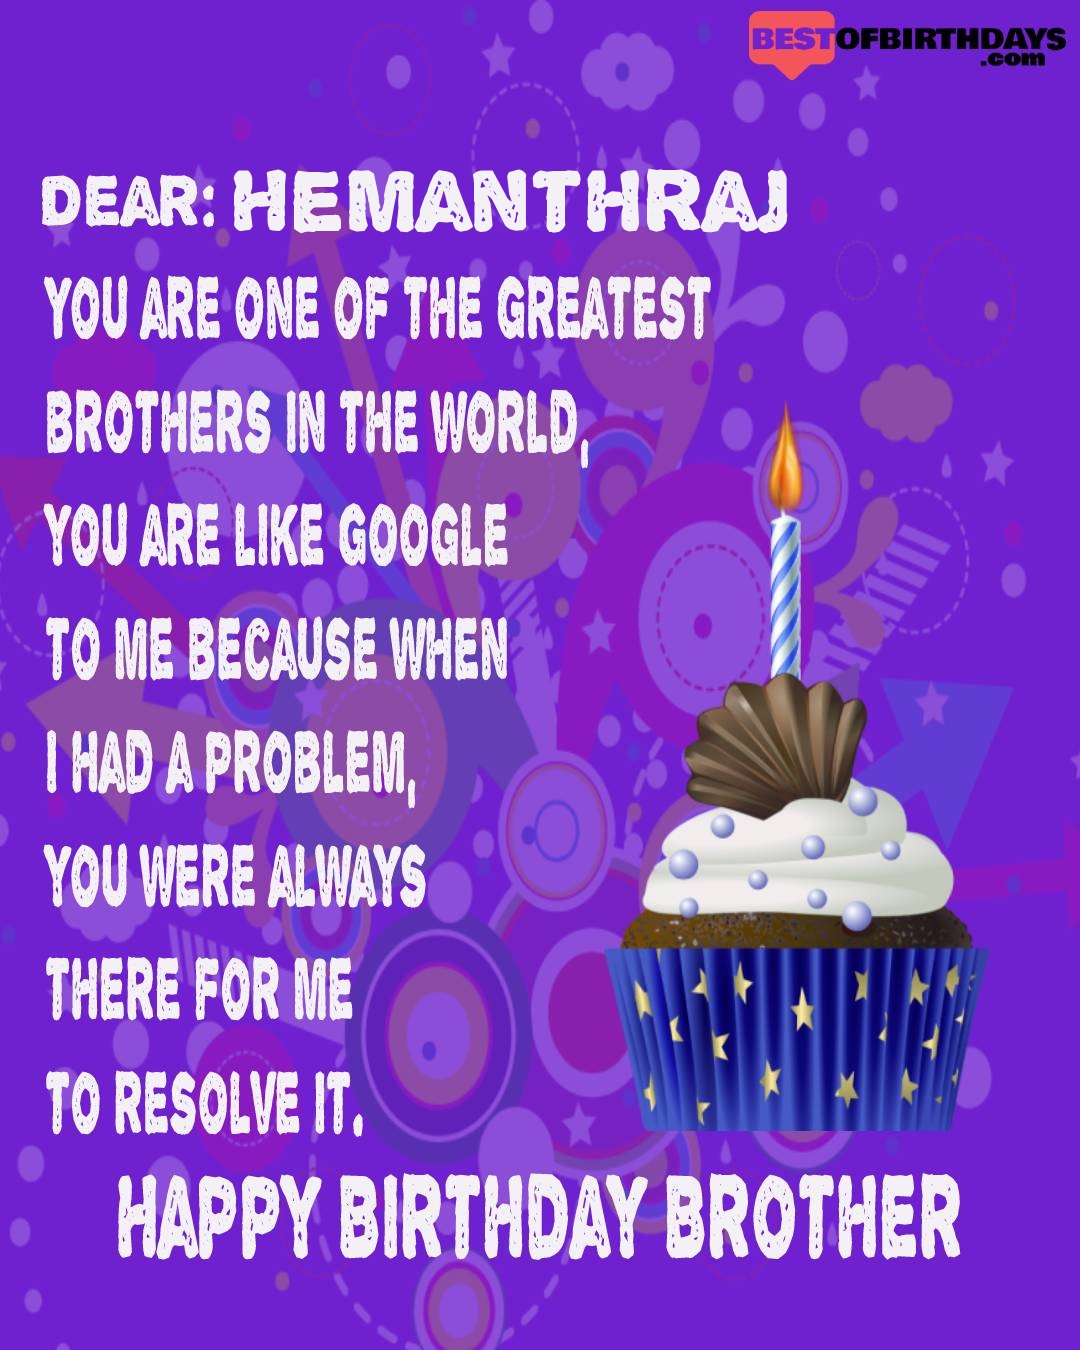 Happy birthday hemanthraj bhai brother bro